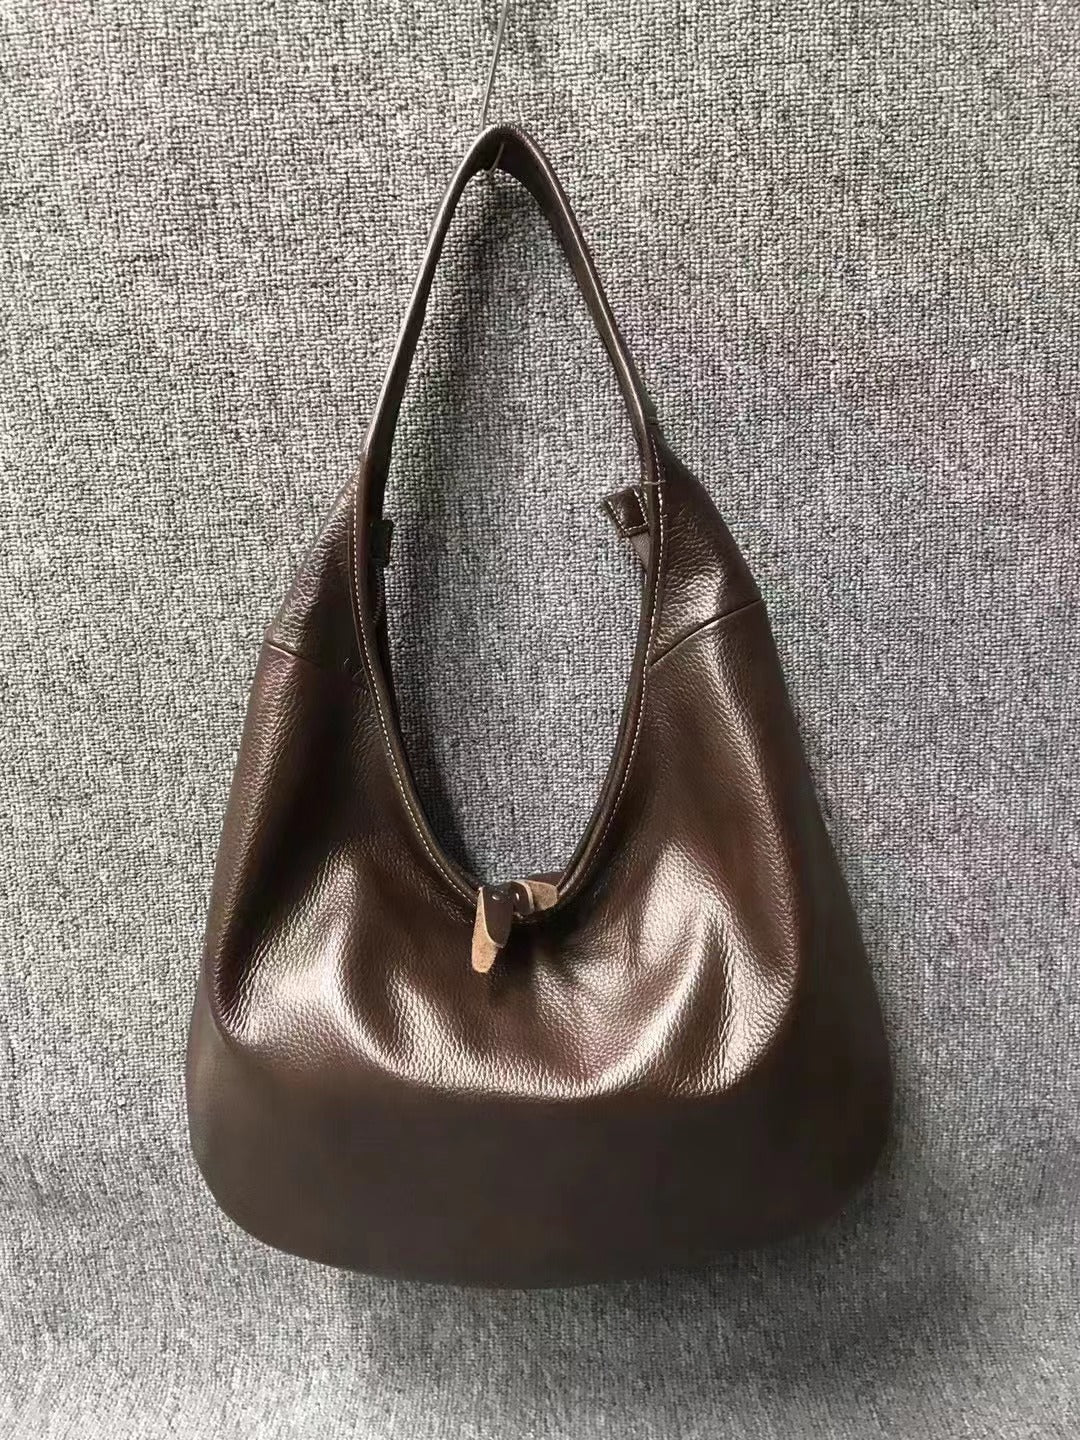 Exquisite Retro Design Leather Shoulder Tote Bag woyaza